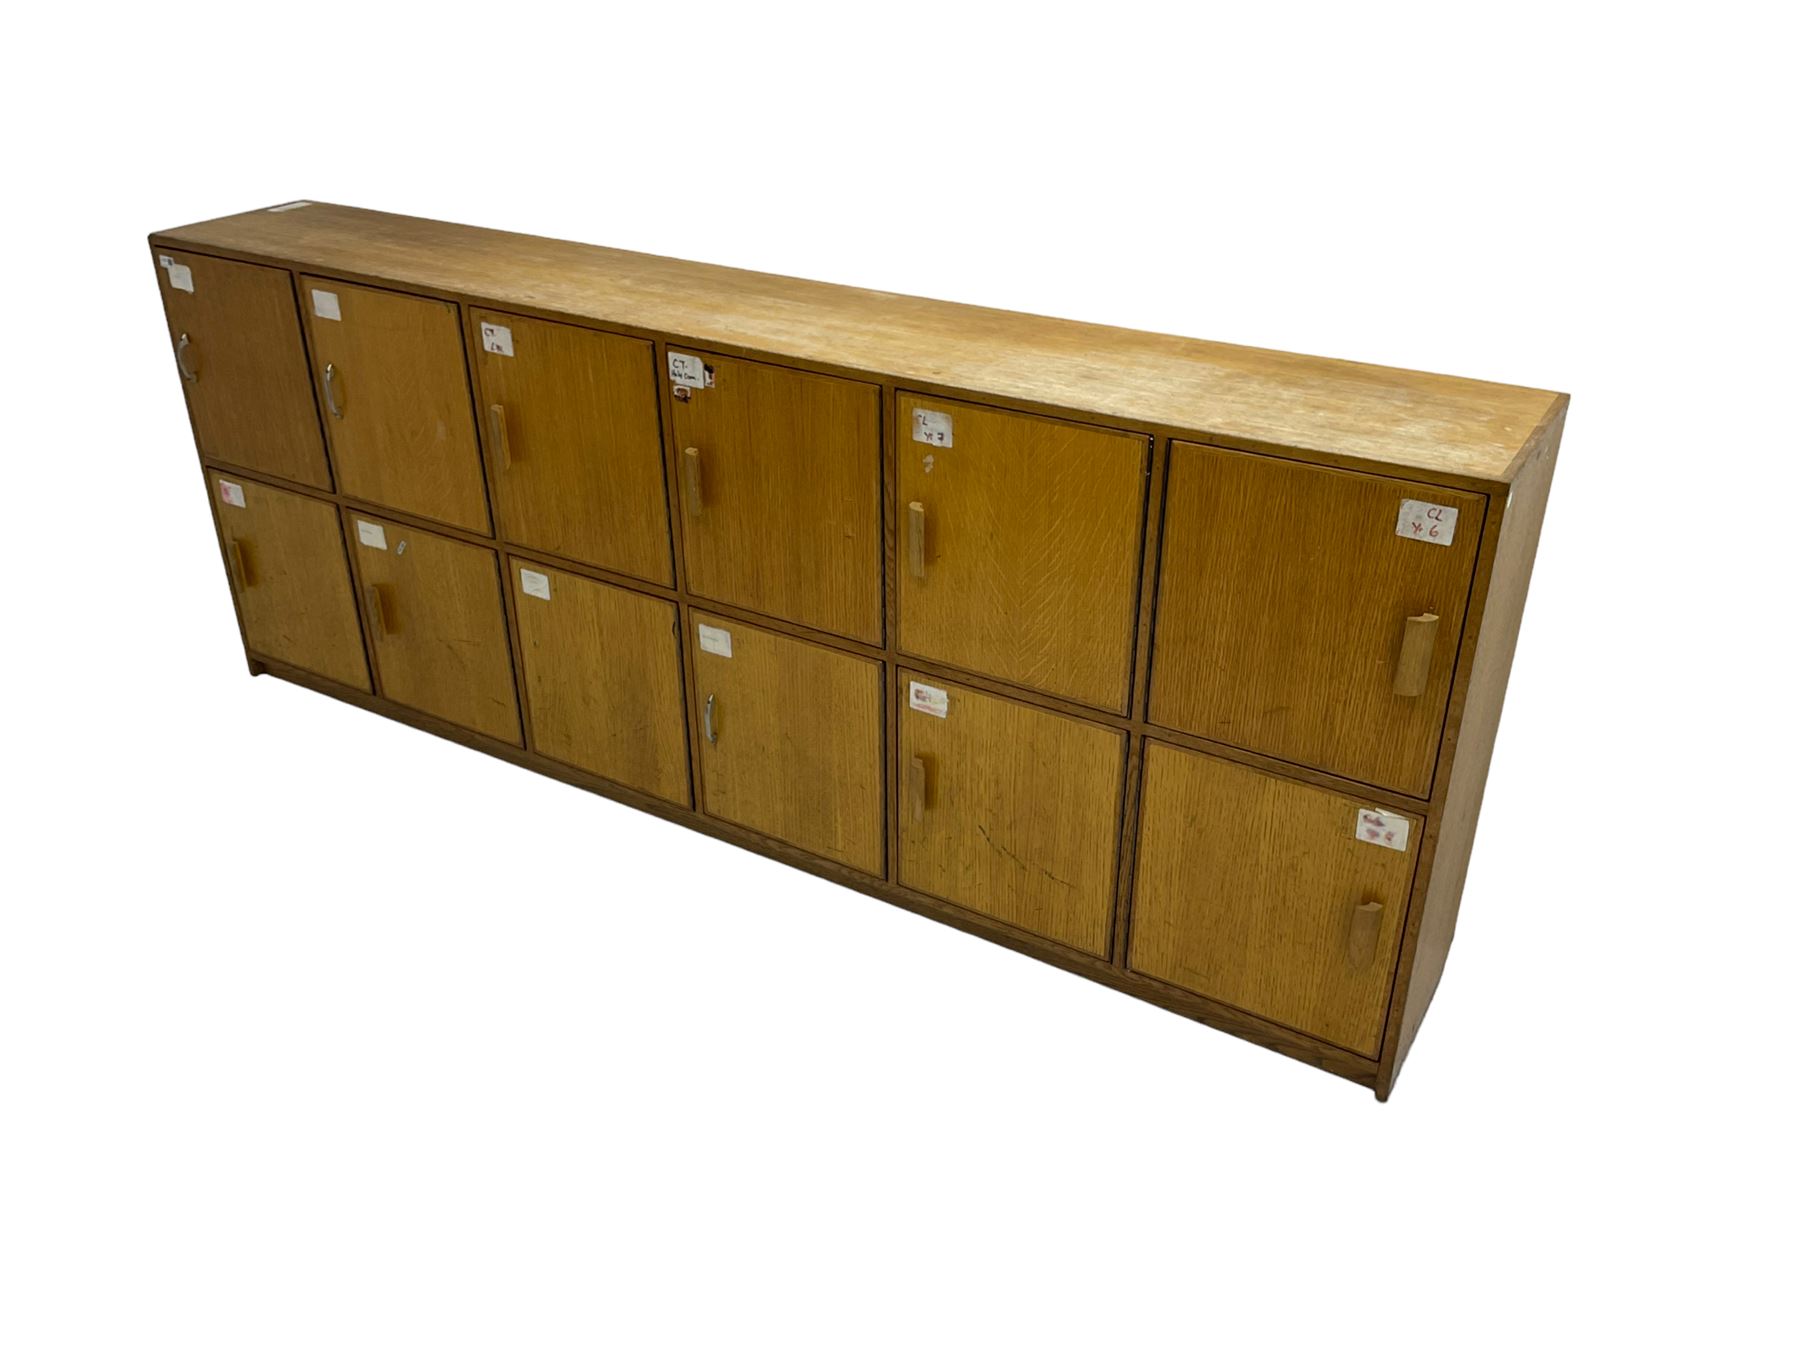 20th century oak bank of lockers - Image 6 of 6